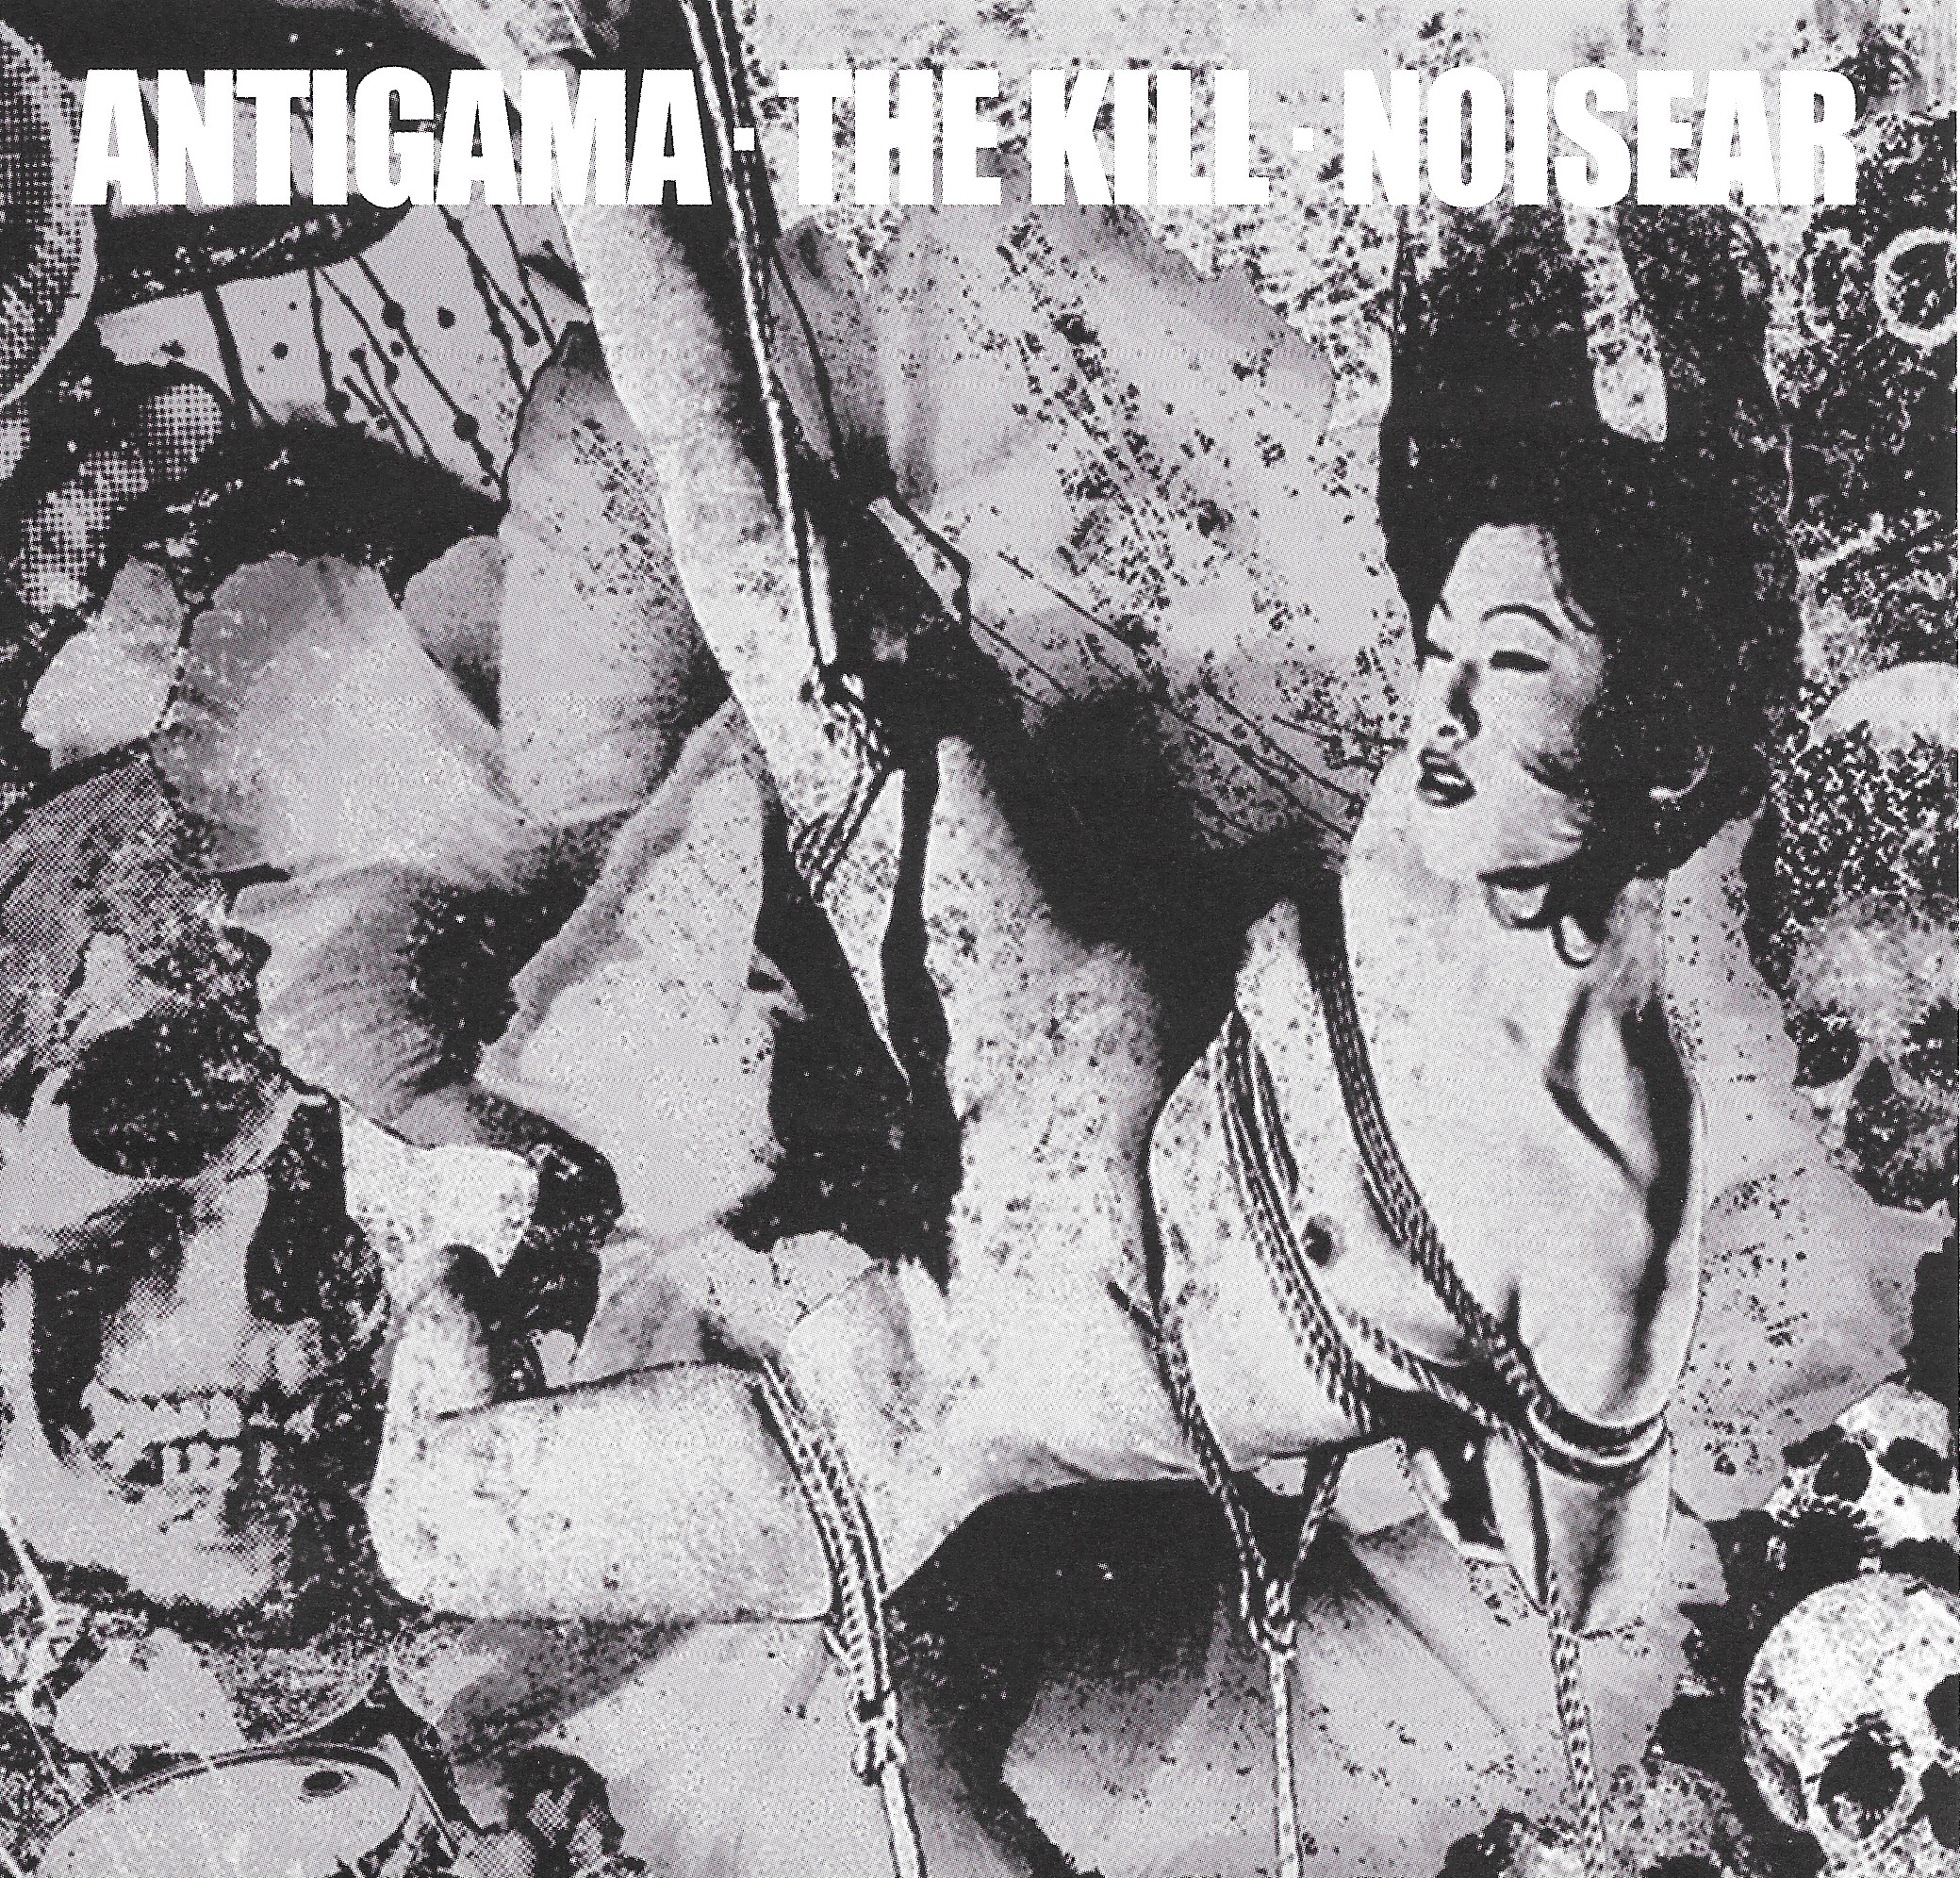 ANTIGAMA / THE KILL / NOISEAR – 3 WAY SPLIT 7" BOX SET